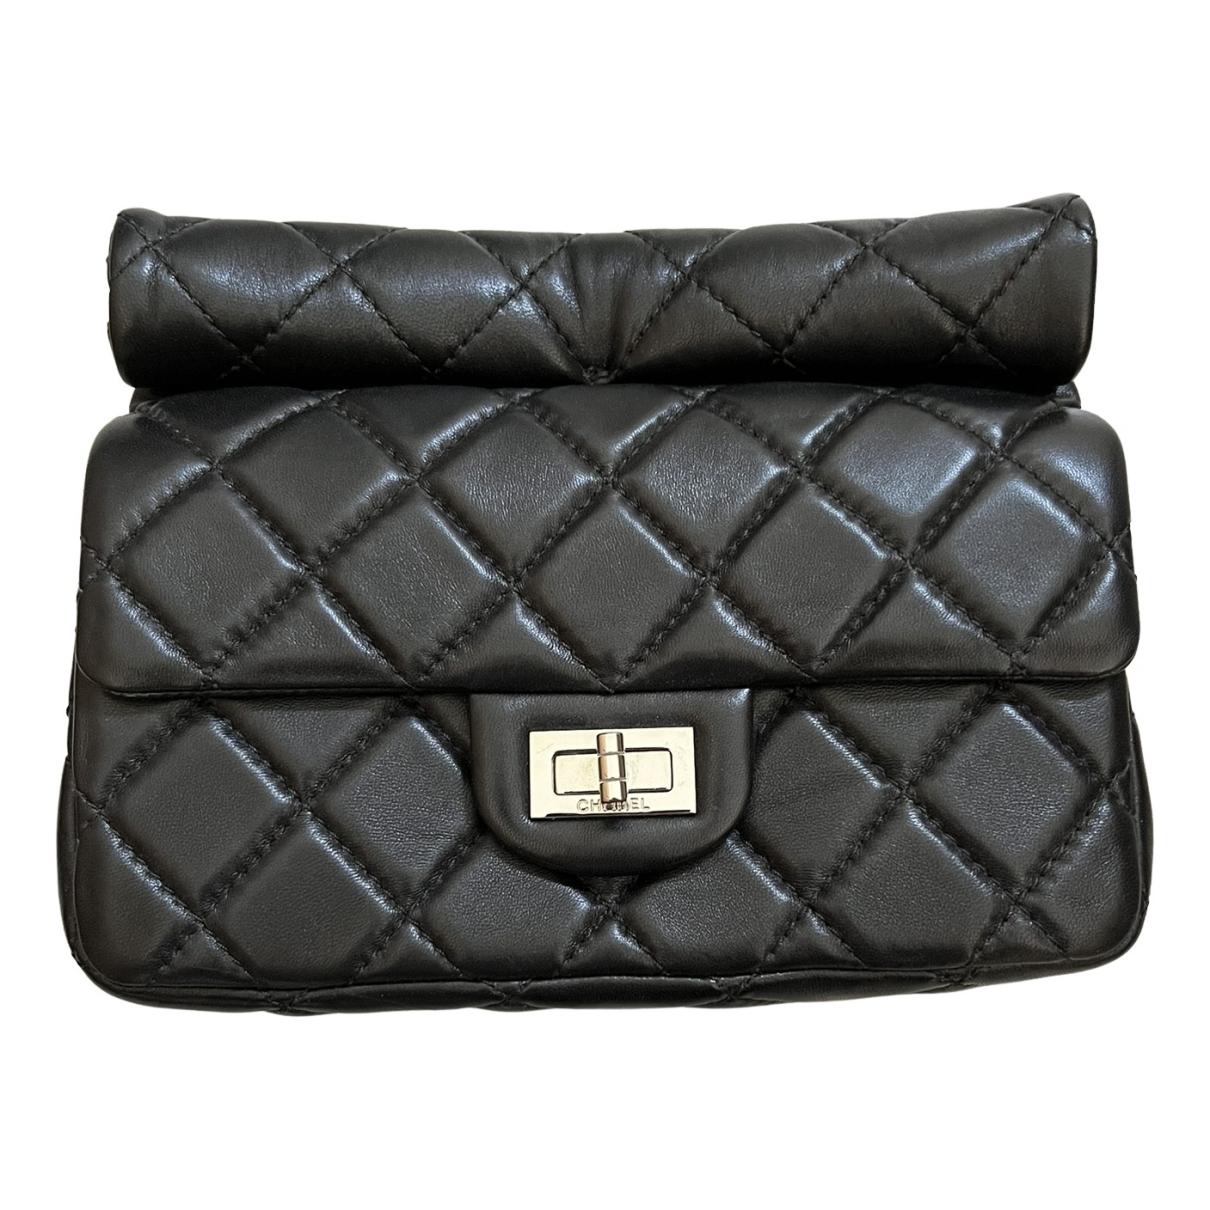 Chanel Women's Clutch Bags - Bags